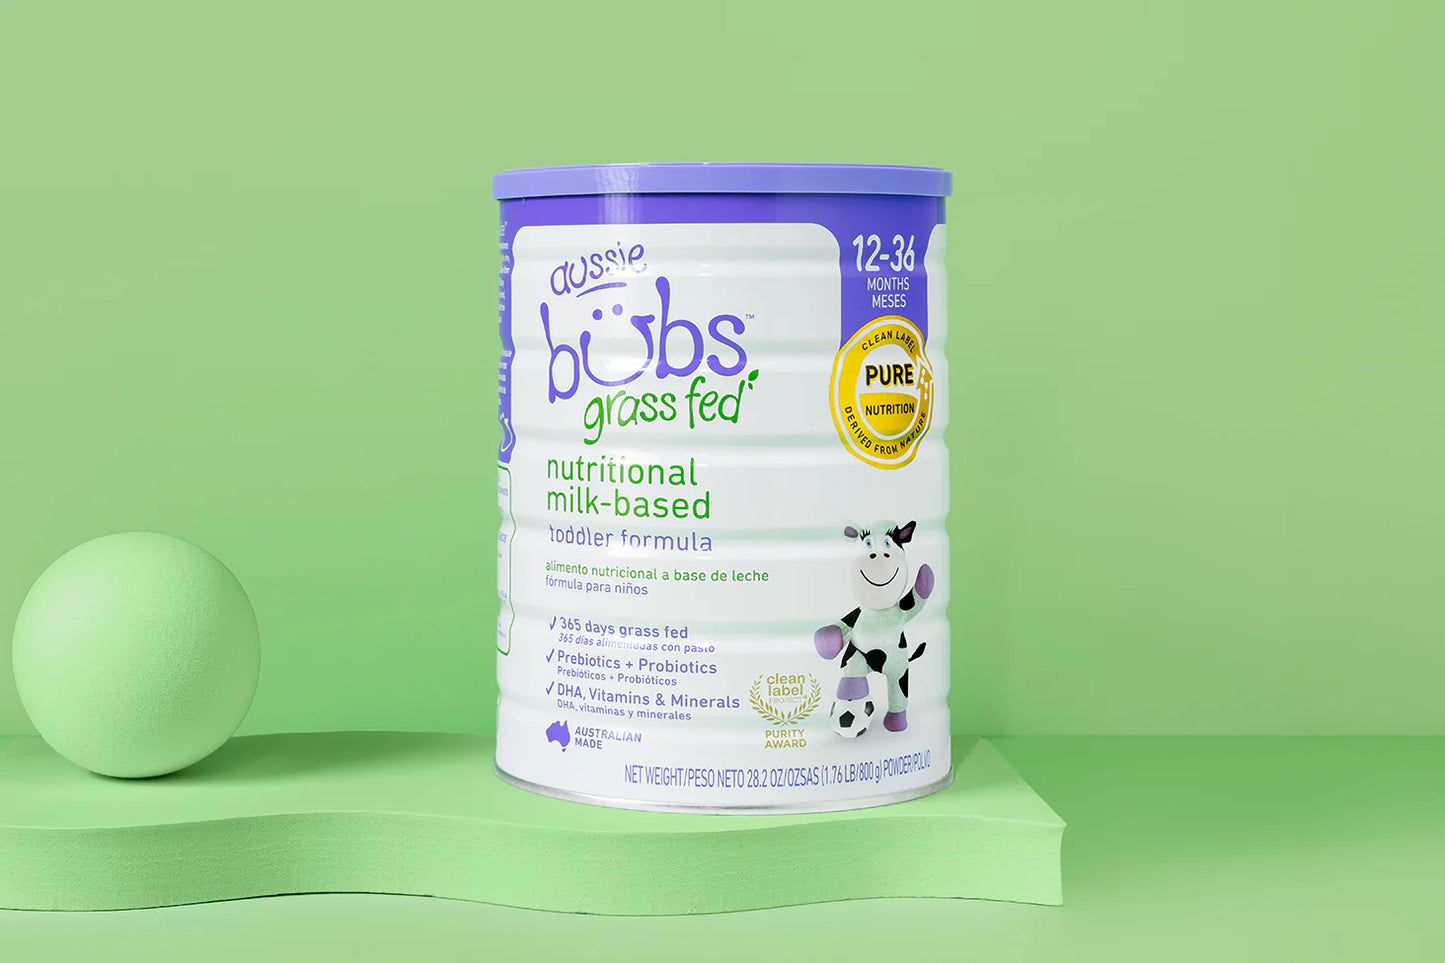 Aussie Bubs Grass Fed Nutritional Milk-based Toddler Formula (Stage 3, 12+ months)